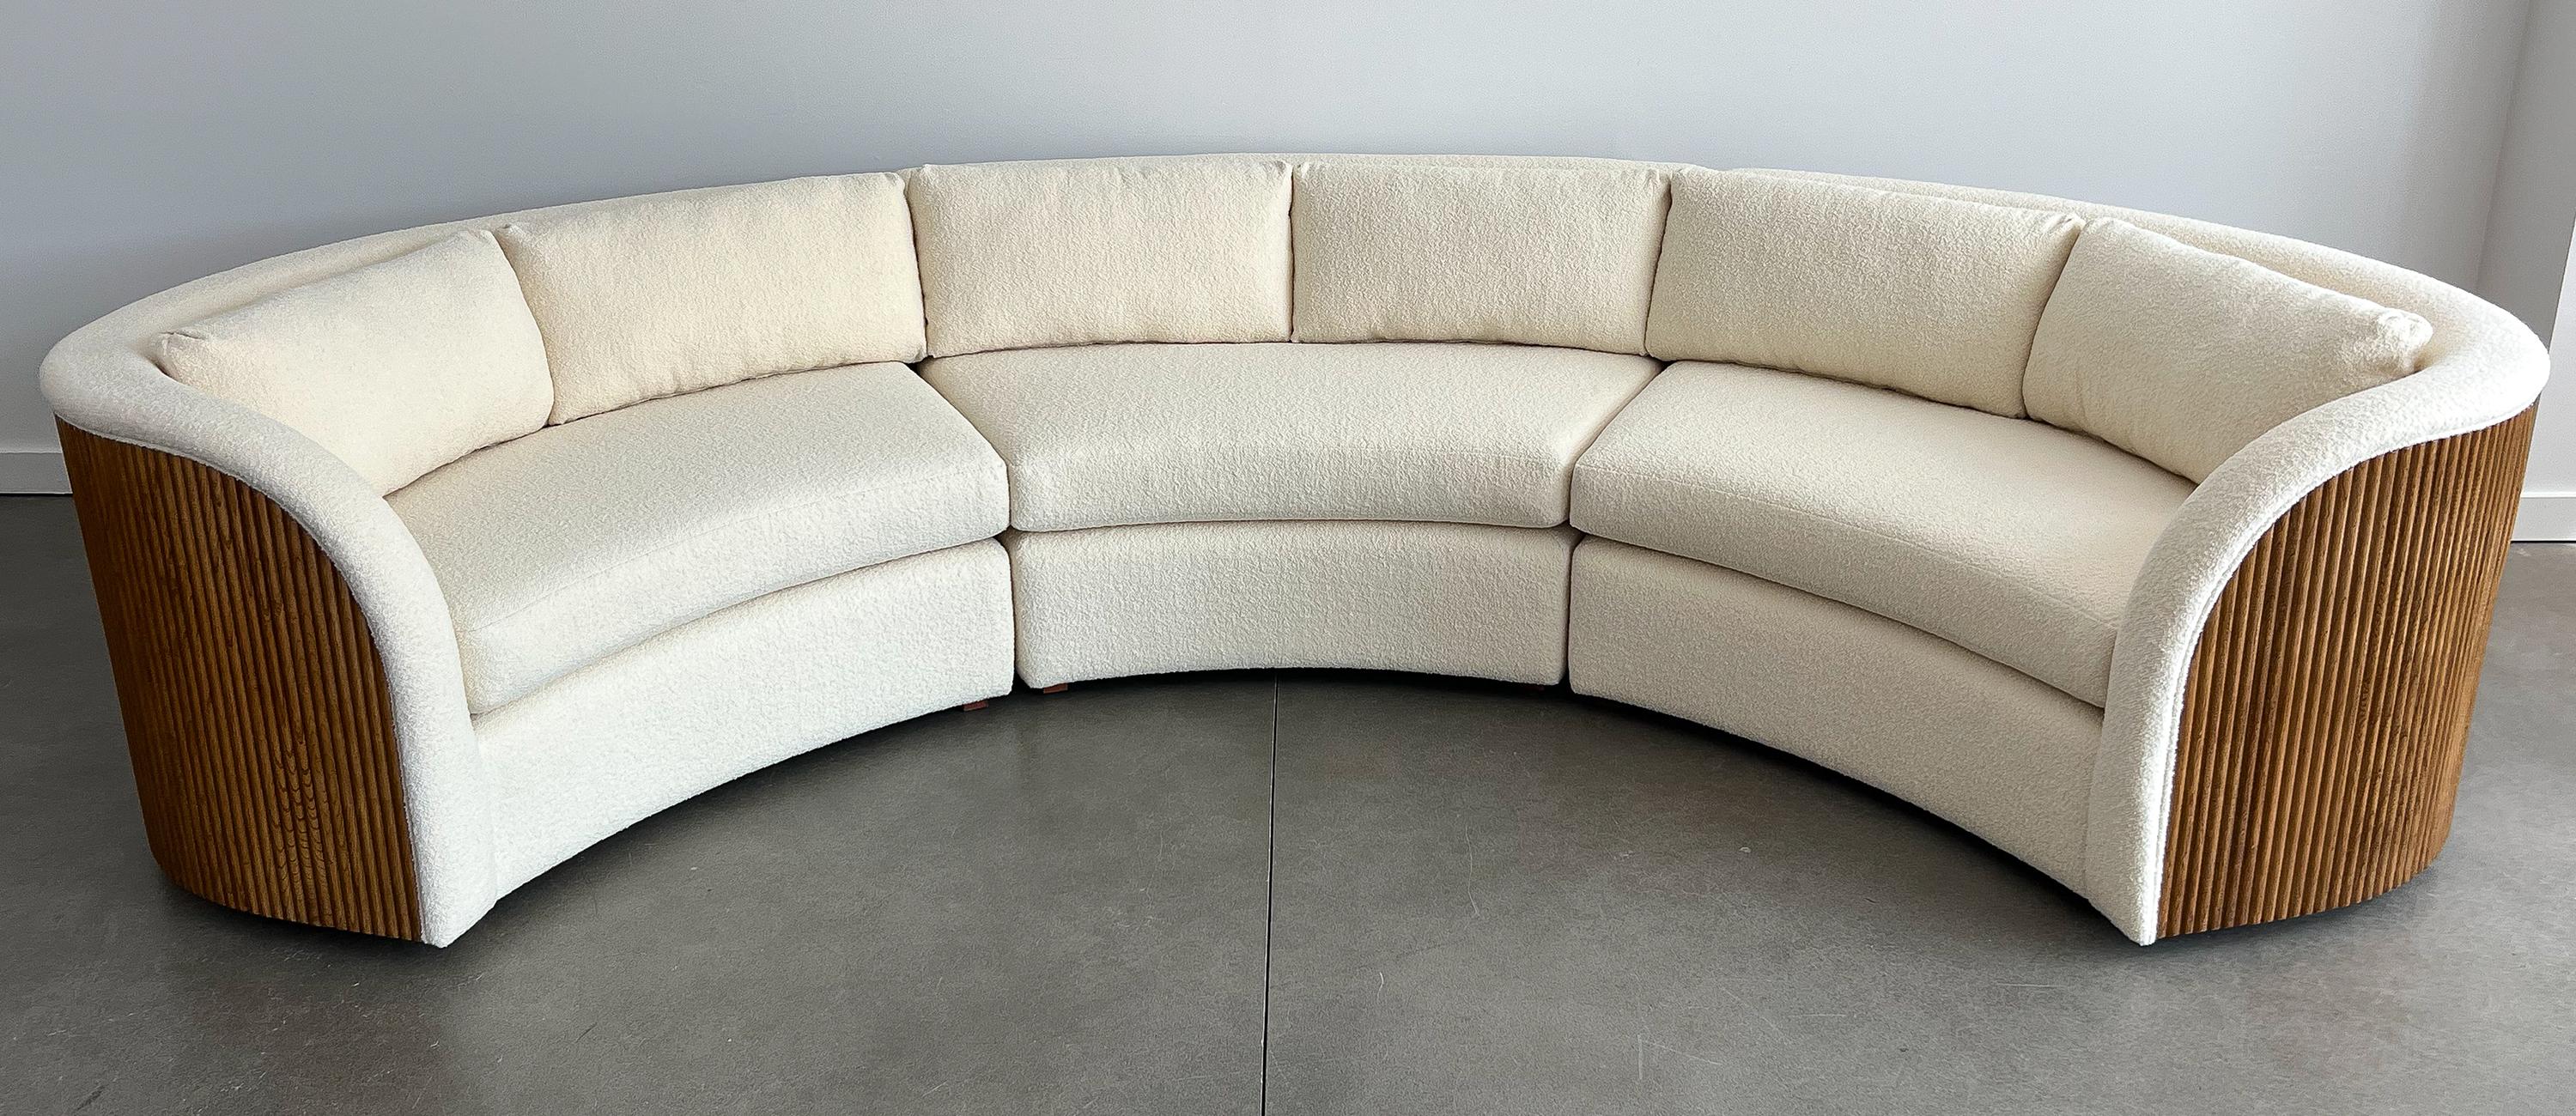 oak sectional sofa